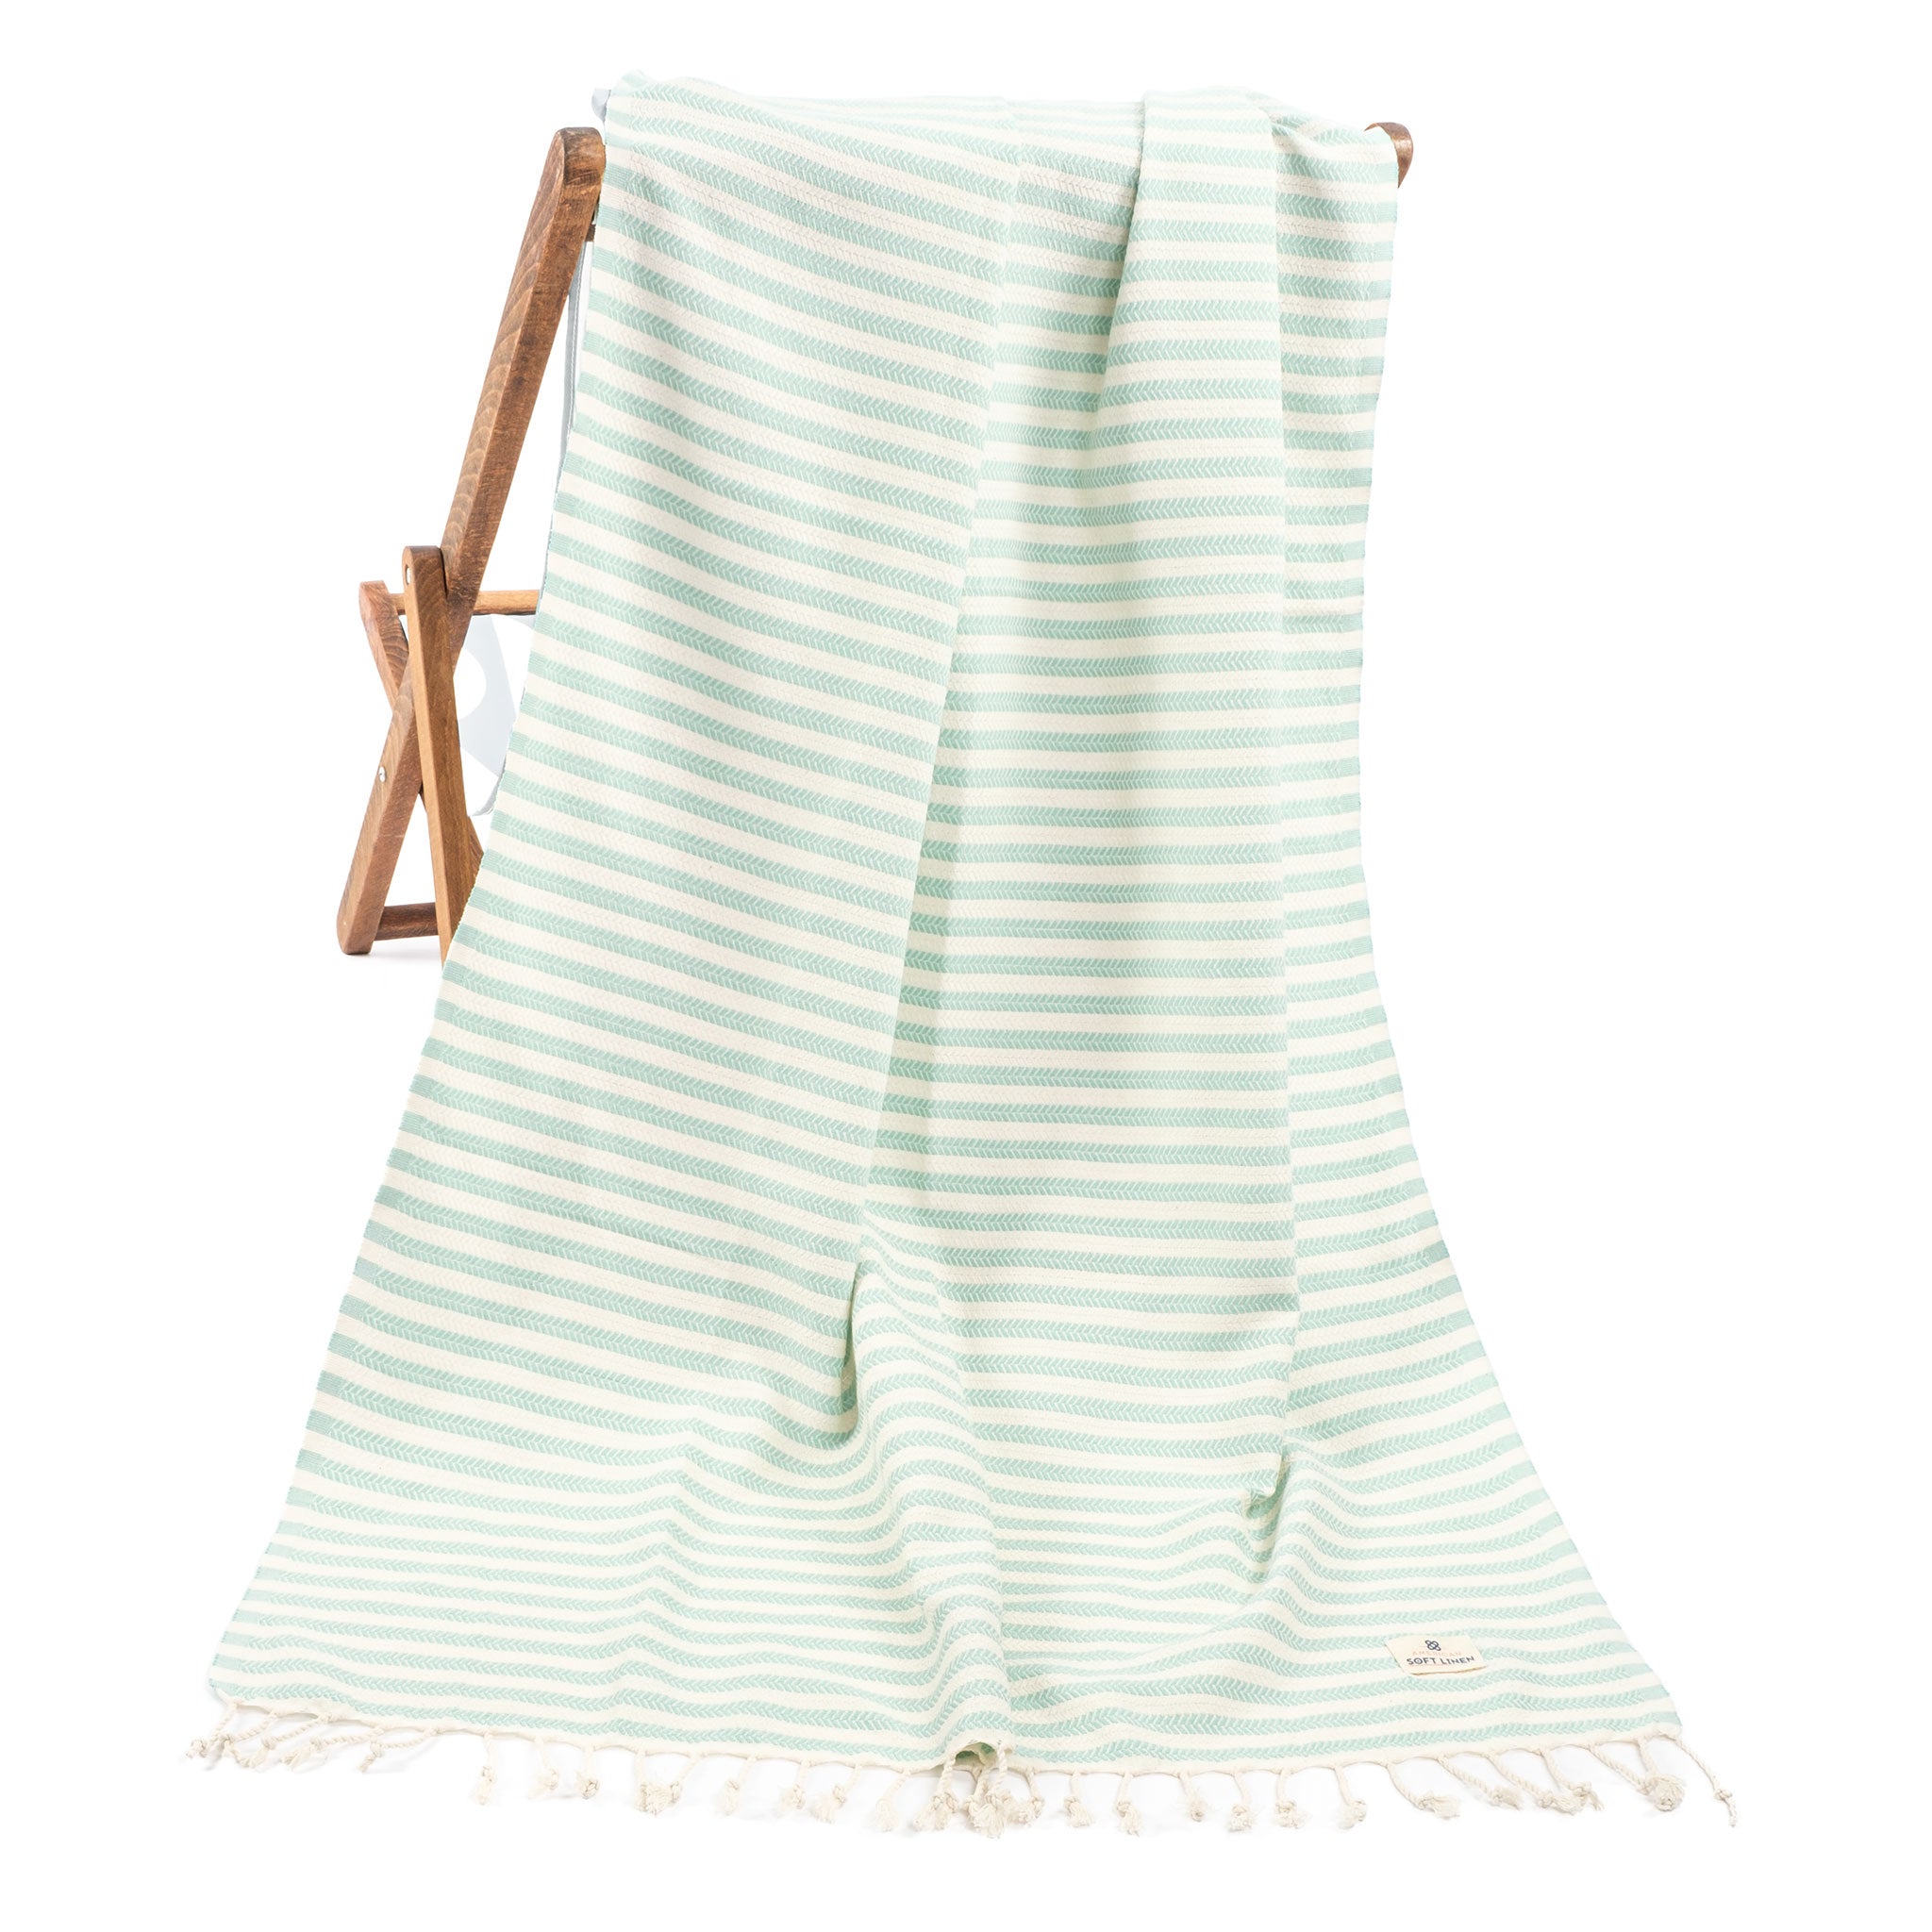 American Soft Linen - 100% Cotton Turkish Peshtemal Towels 40x70 Inches - Sage - 1